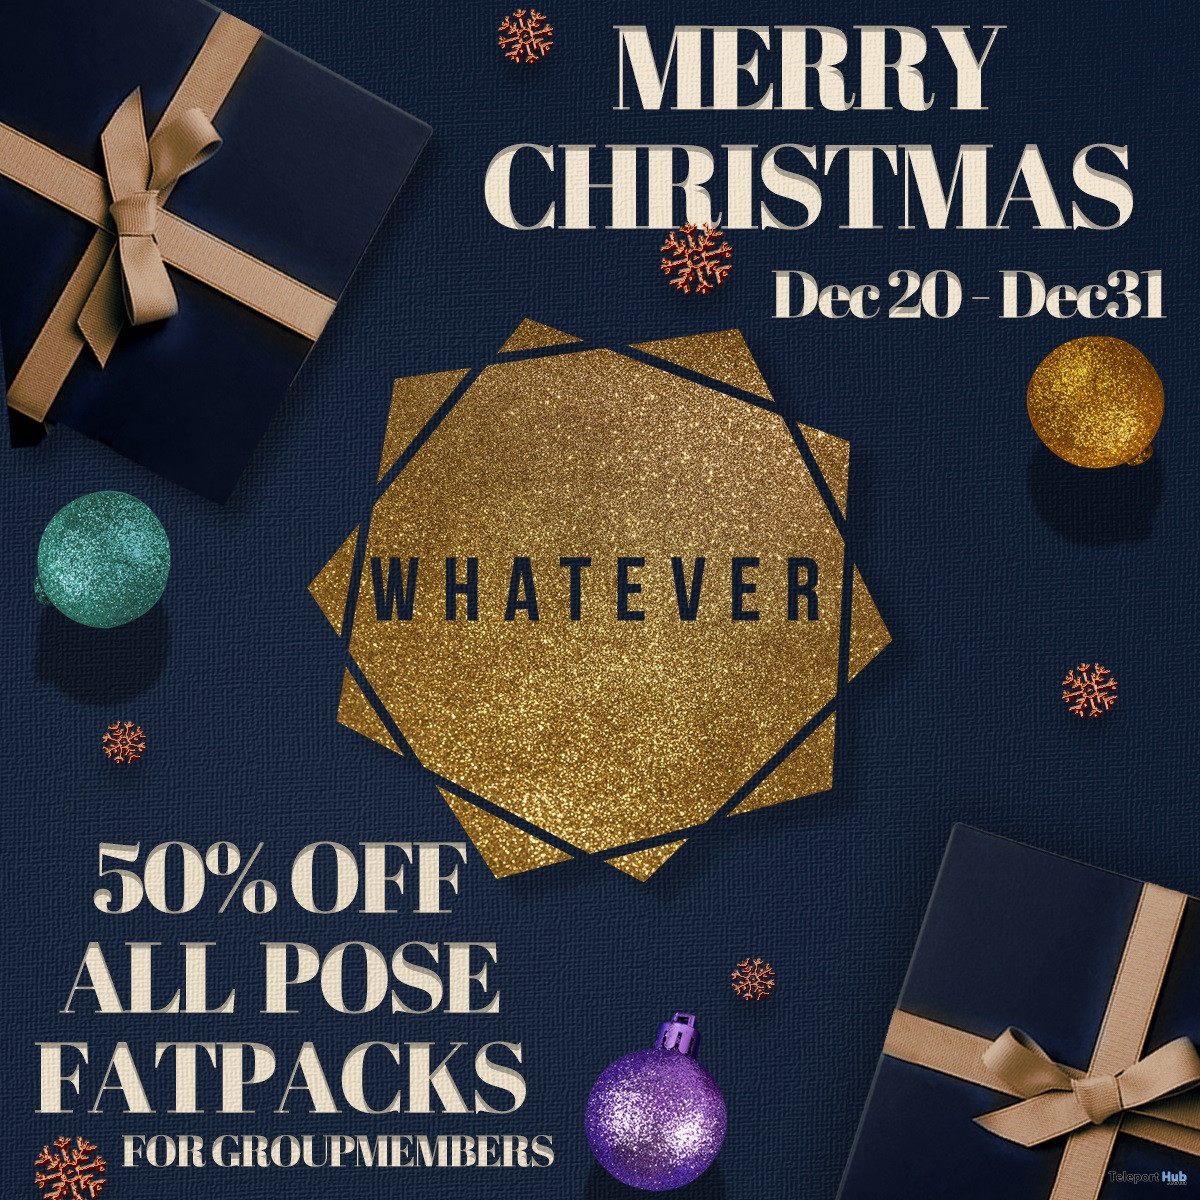 Whatever Store's Merry Christmas Sale 2022 - Teleport Hub - teleporthub.com